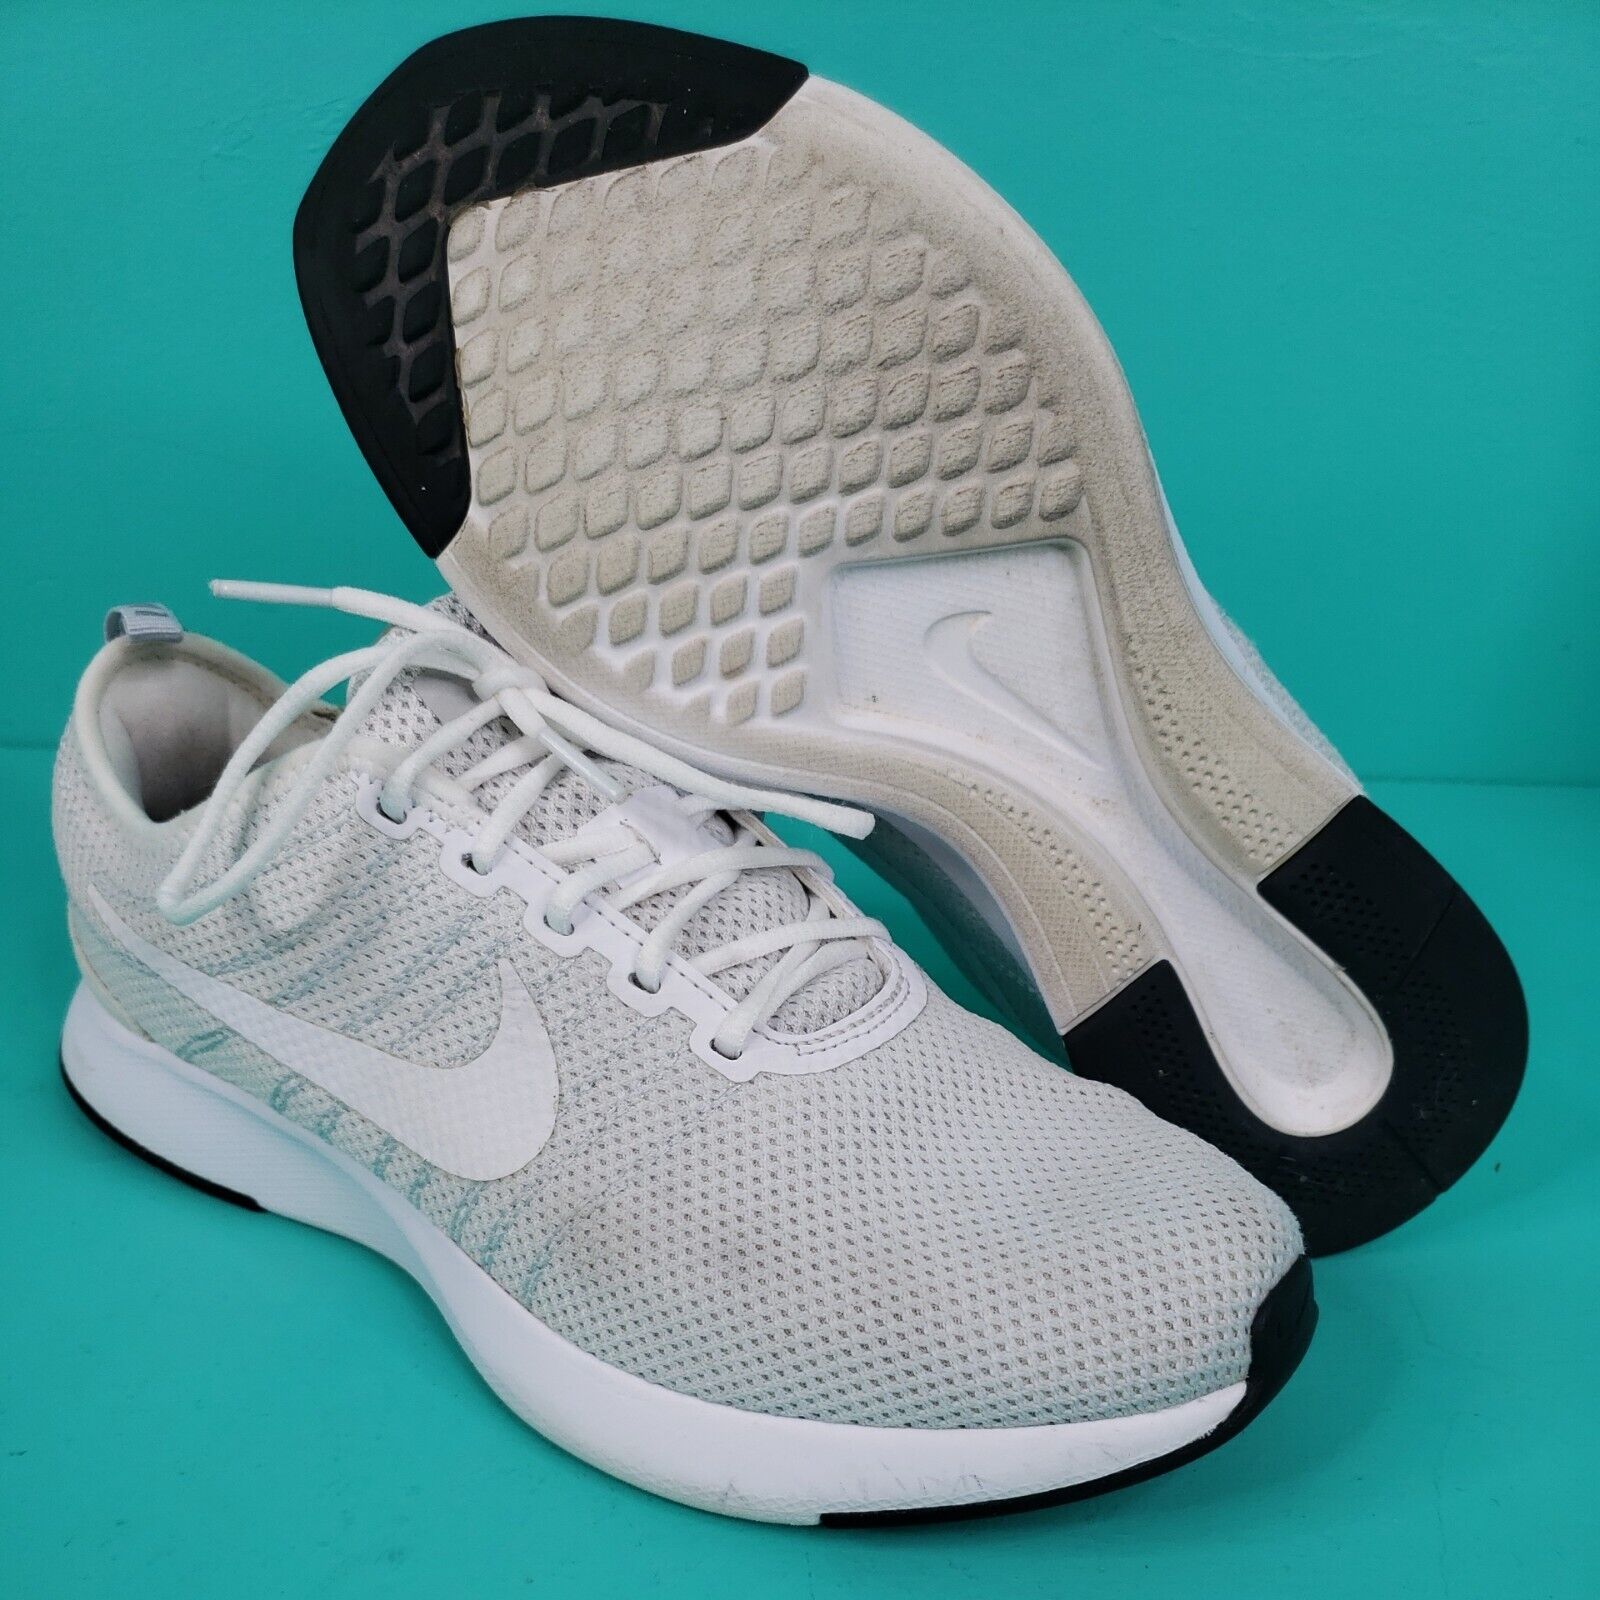 Mm vredig nooit Nike Dualtone Racer White Pure Platinum 917648 102 Running Shoes 7Y Women's  8.5 | eBay